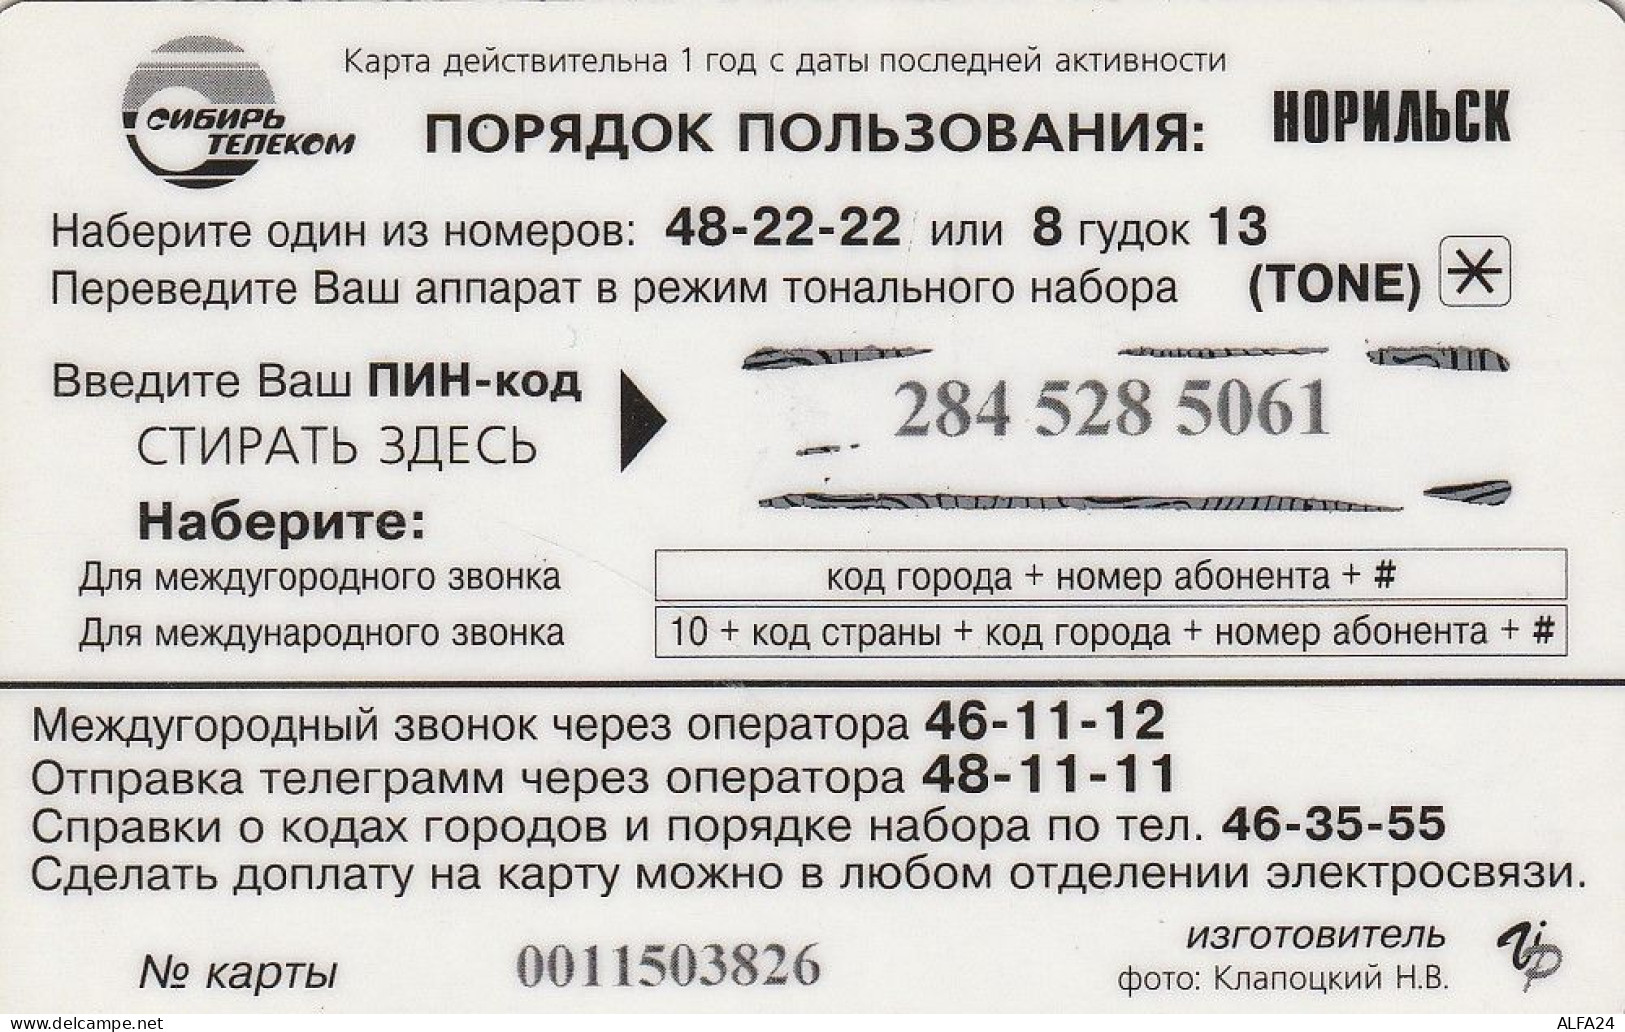 PREPAID PHONE CARD RUSSIA Sibirtelecom - Norilsk, Krasnoyarsk Region CTK (CZ433 - Russia